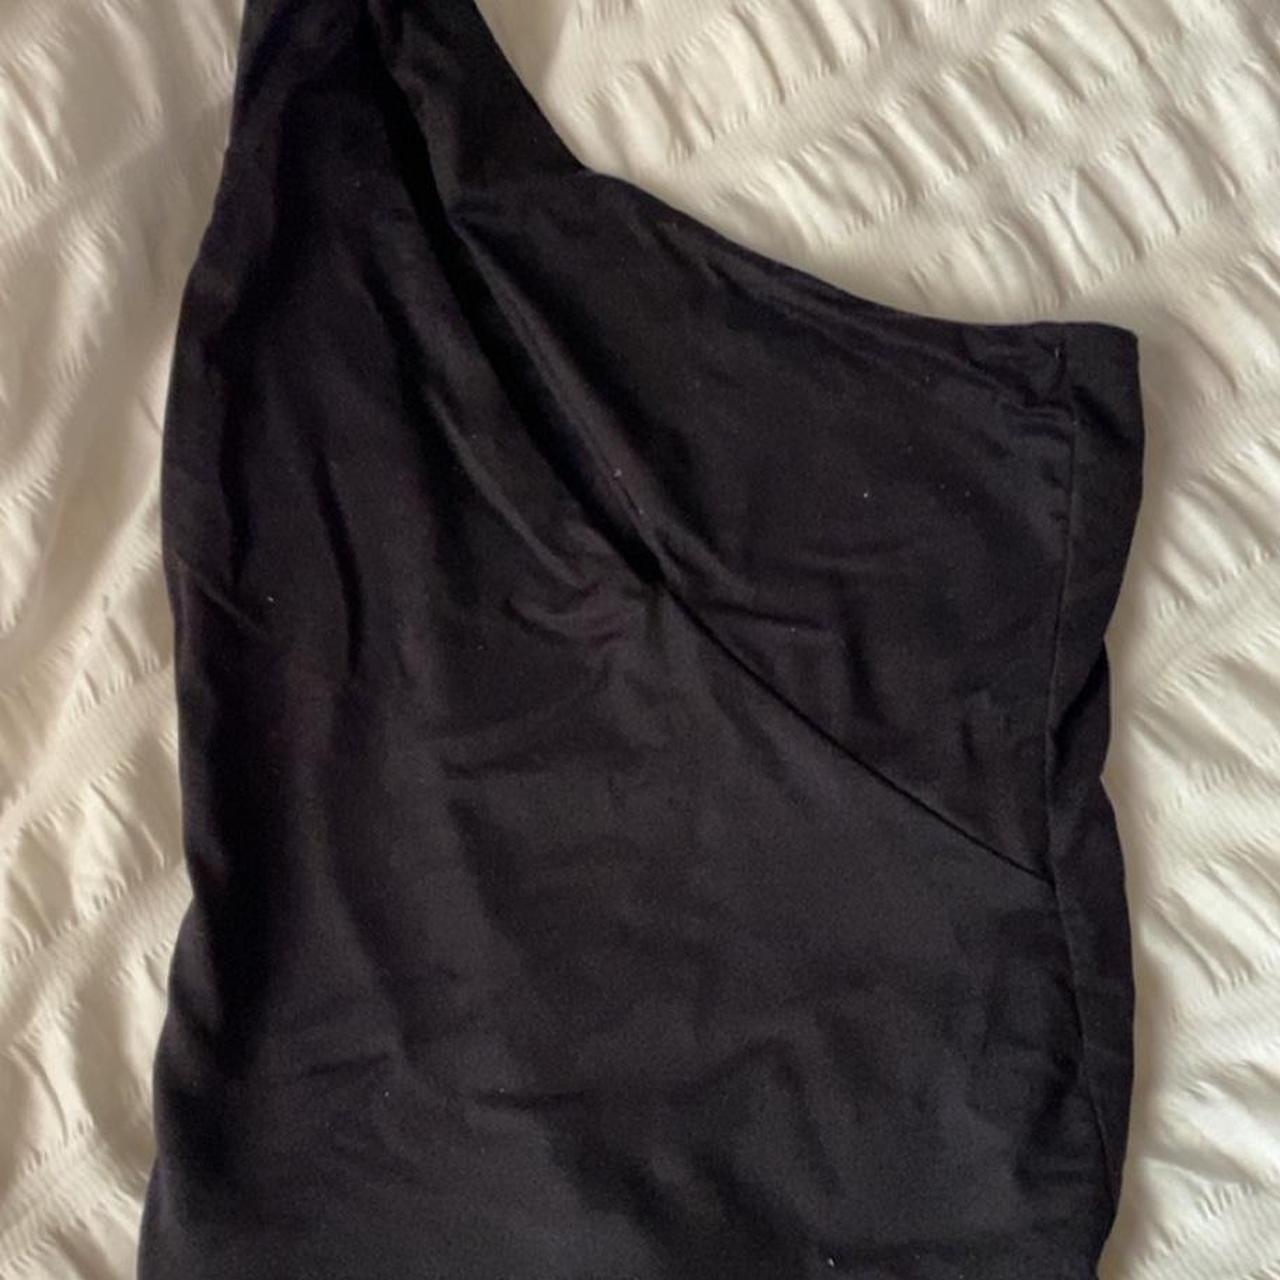 Supersoft One Shoulder Cut Out Bodysuit in Black